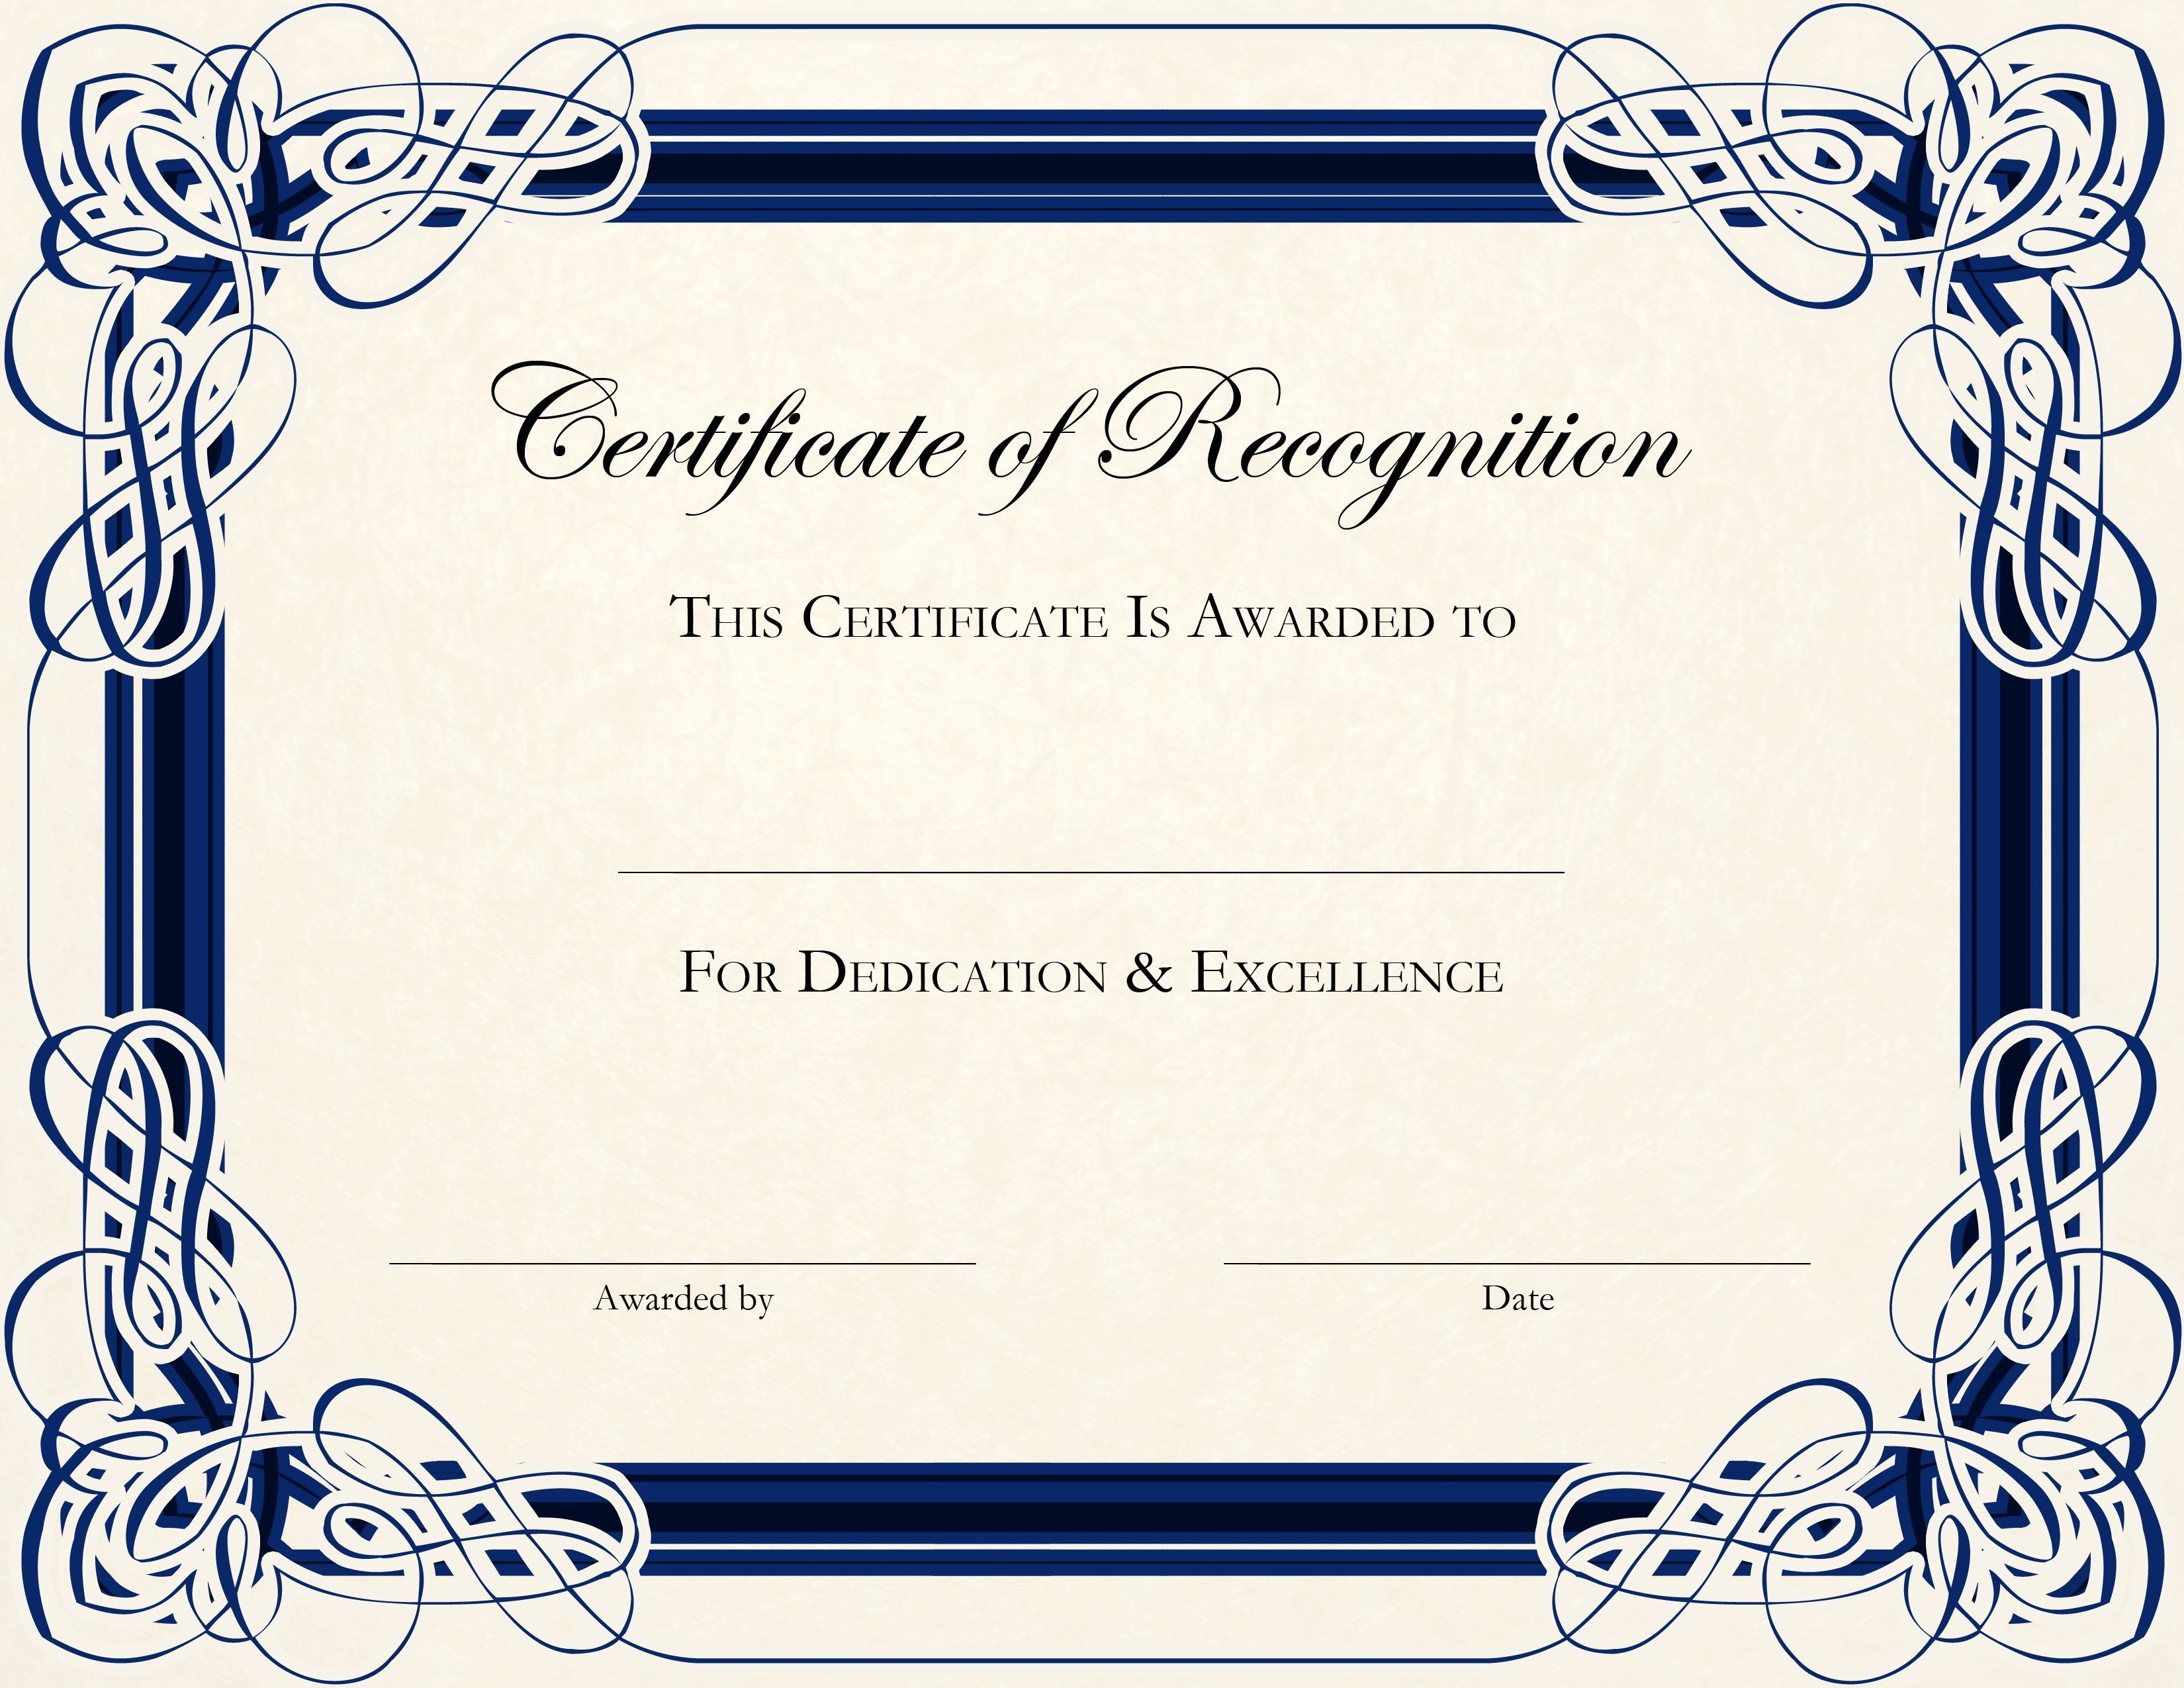 Printable Certificate Template  room surf.com For Free Template For Certificate Of Recognition